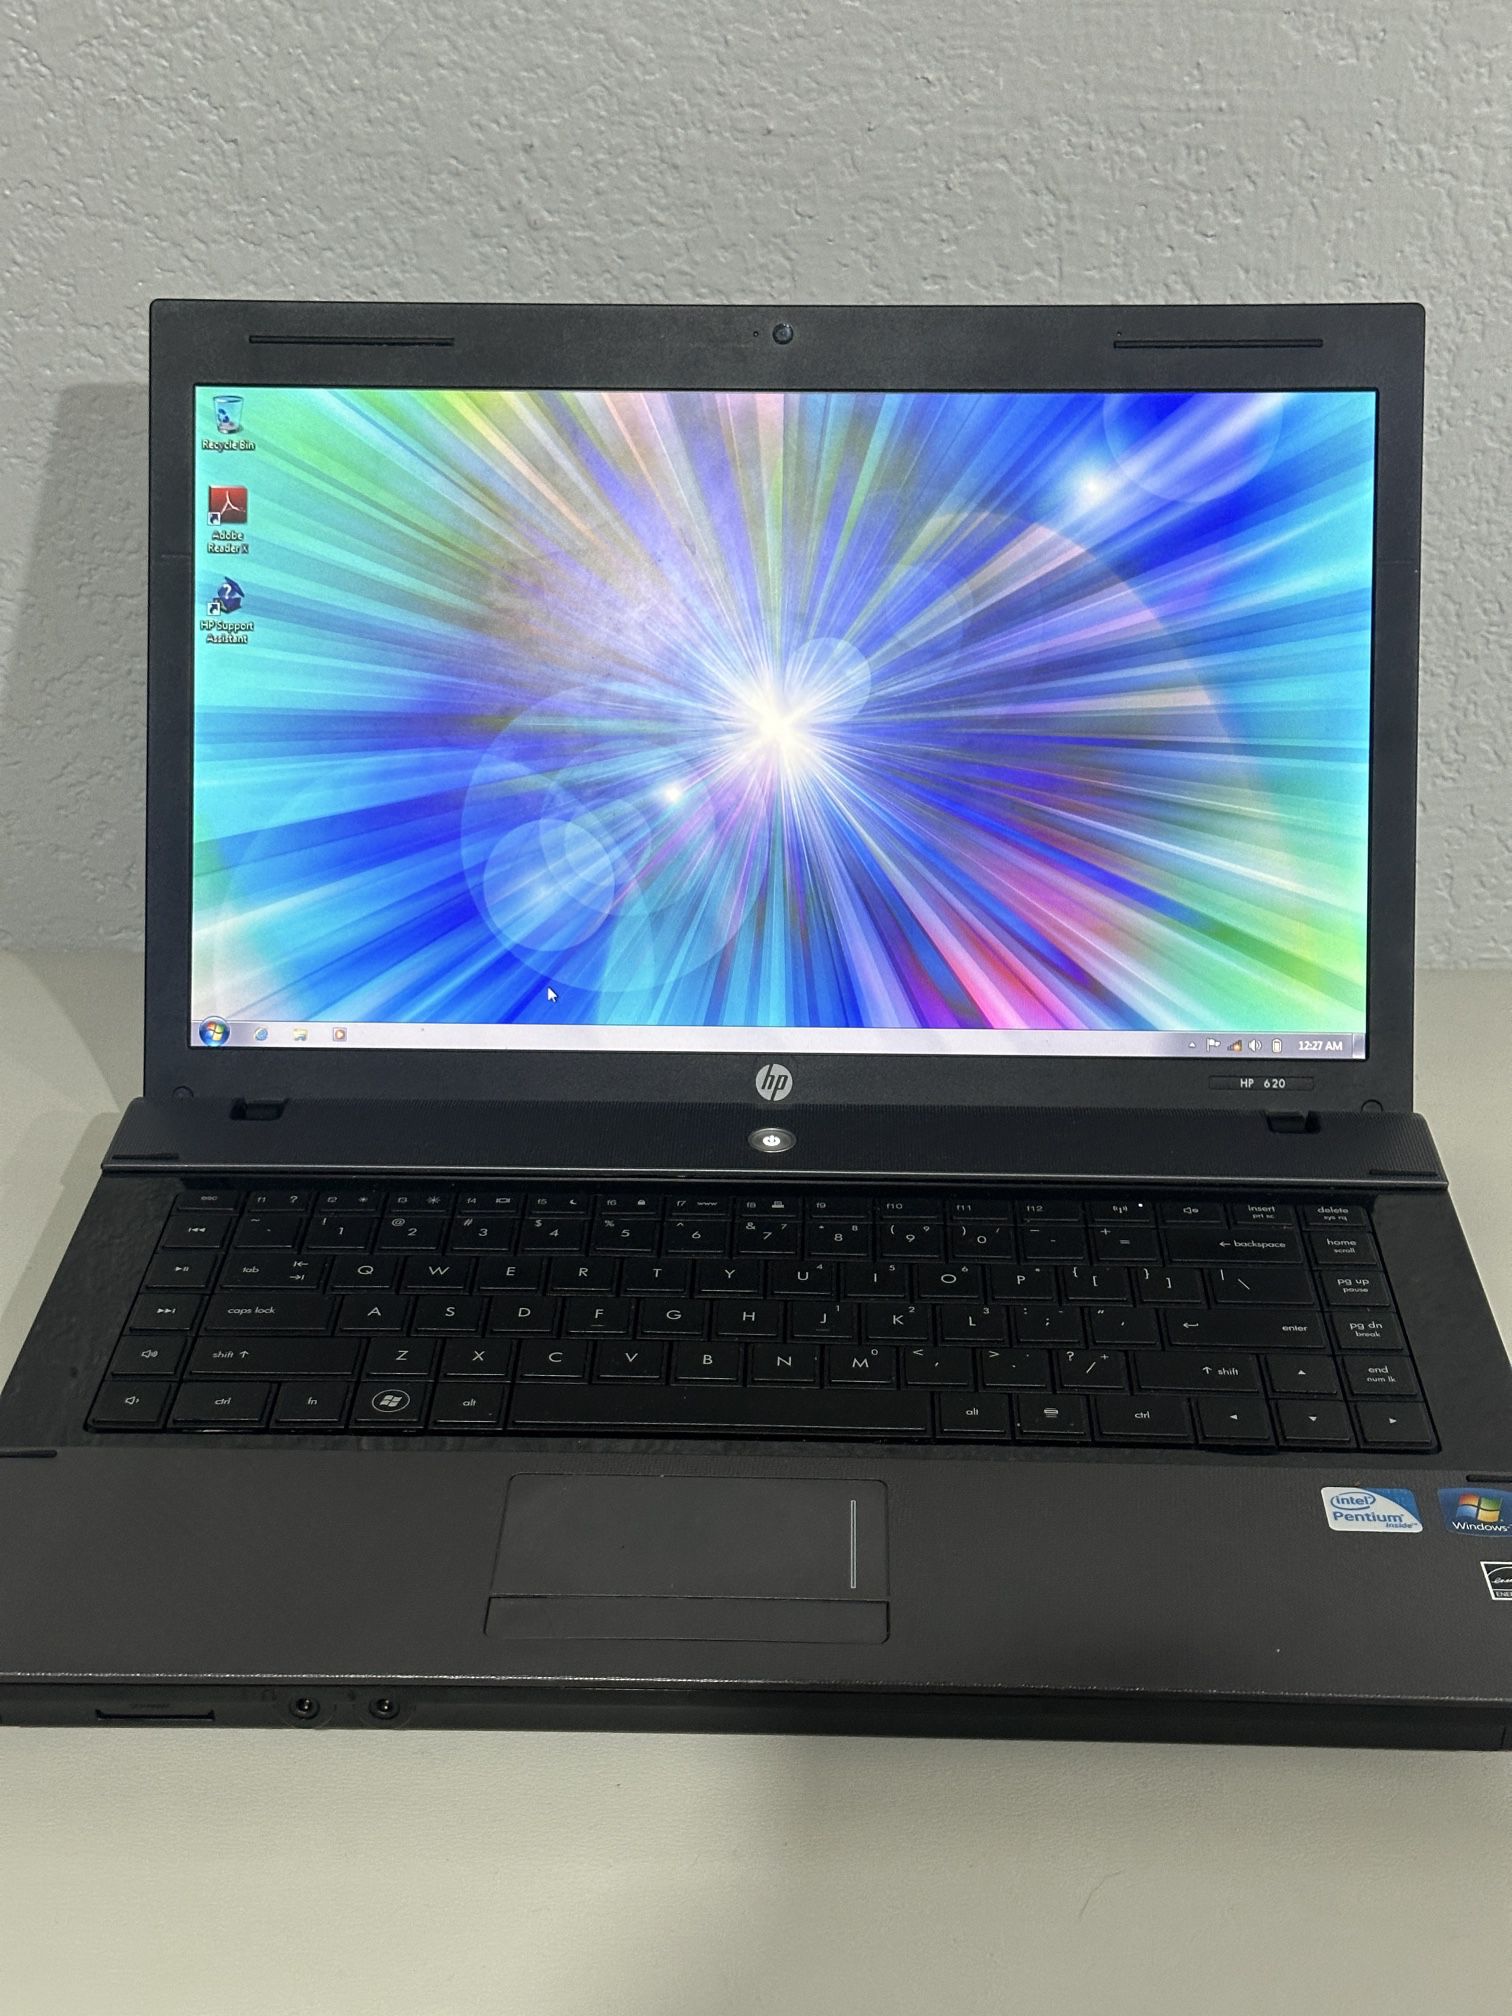 HP Laptop Model 620